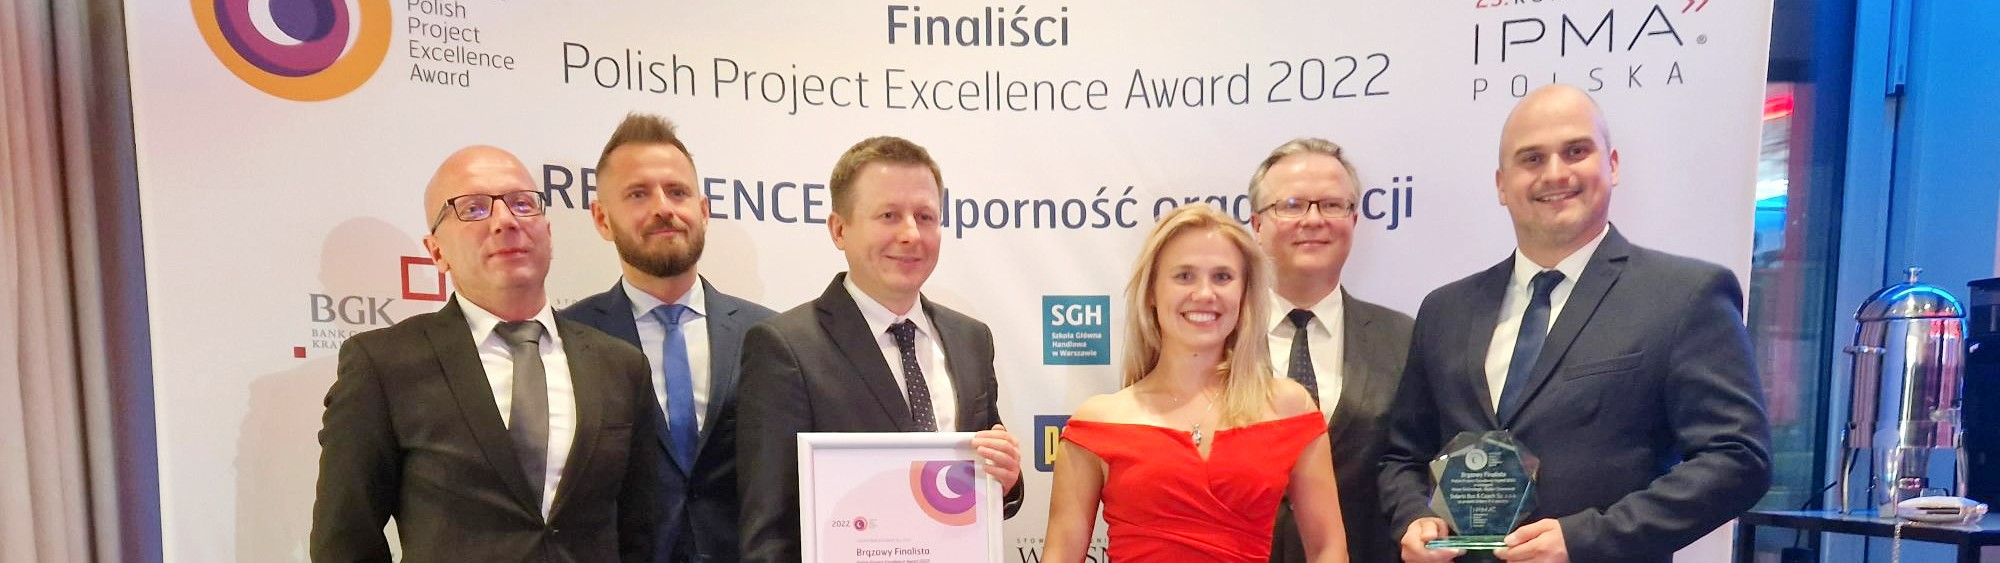 Solaris laureatem Polish Project Excellence Award 2022